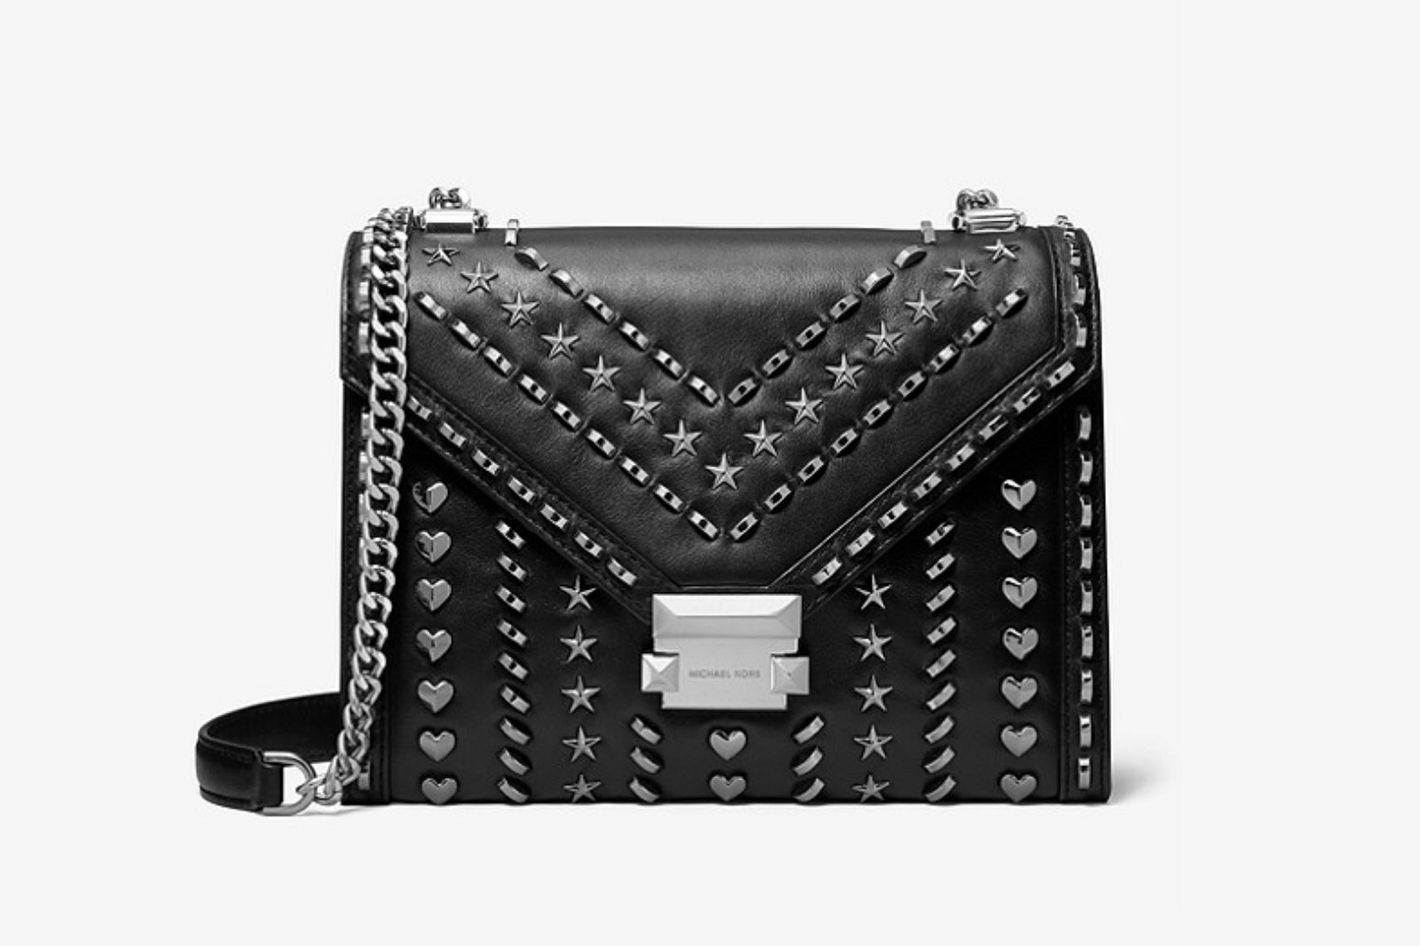 Three Designer Handbags I'd Recommend For Fall